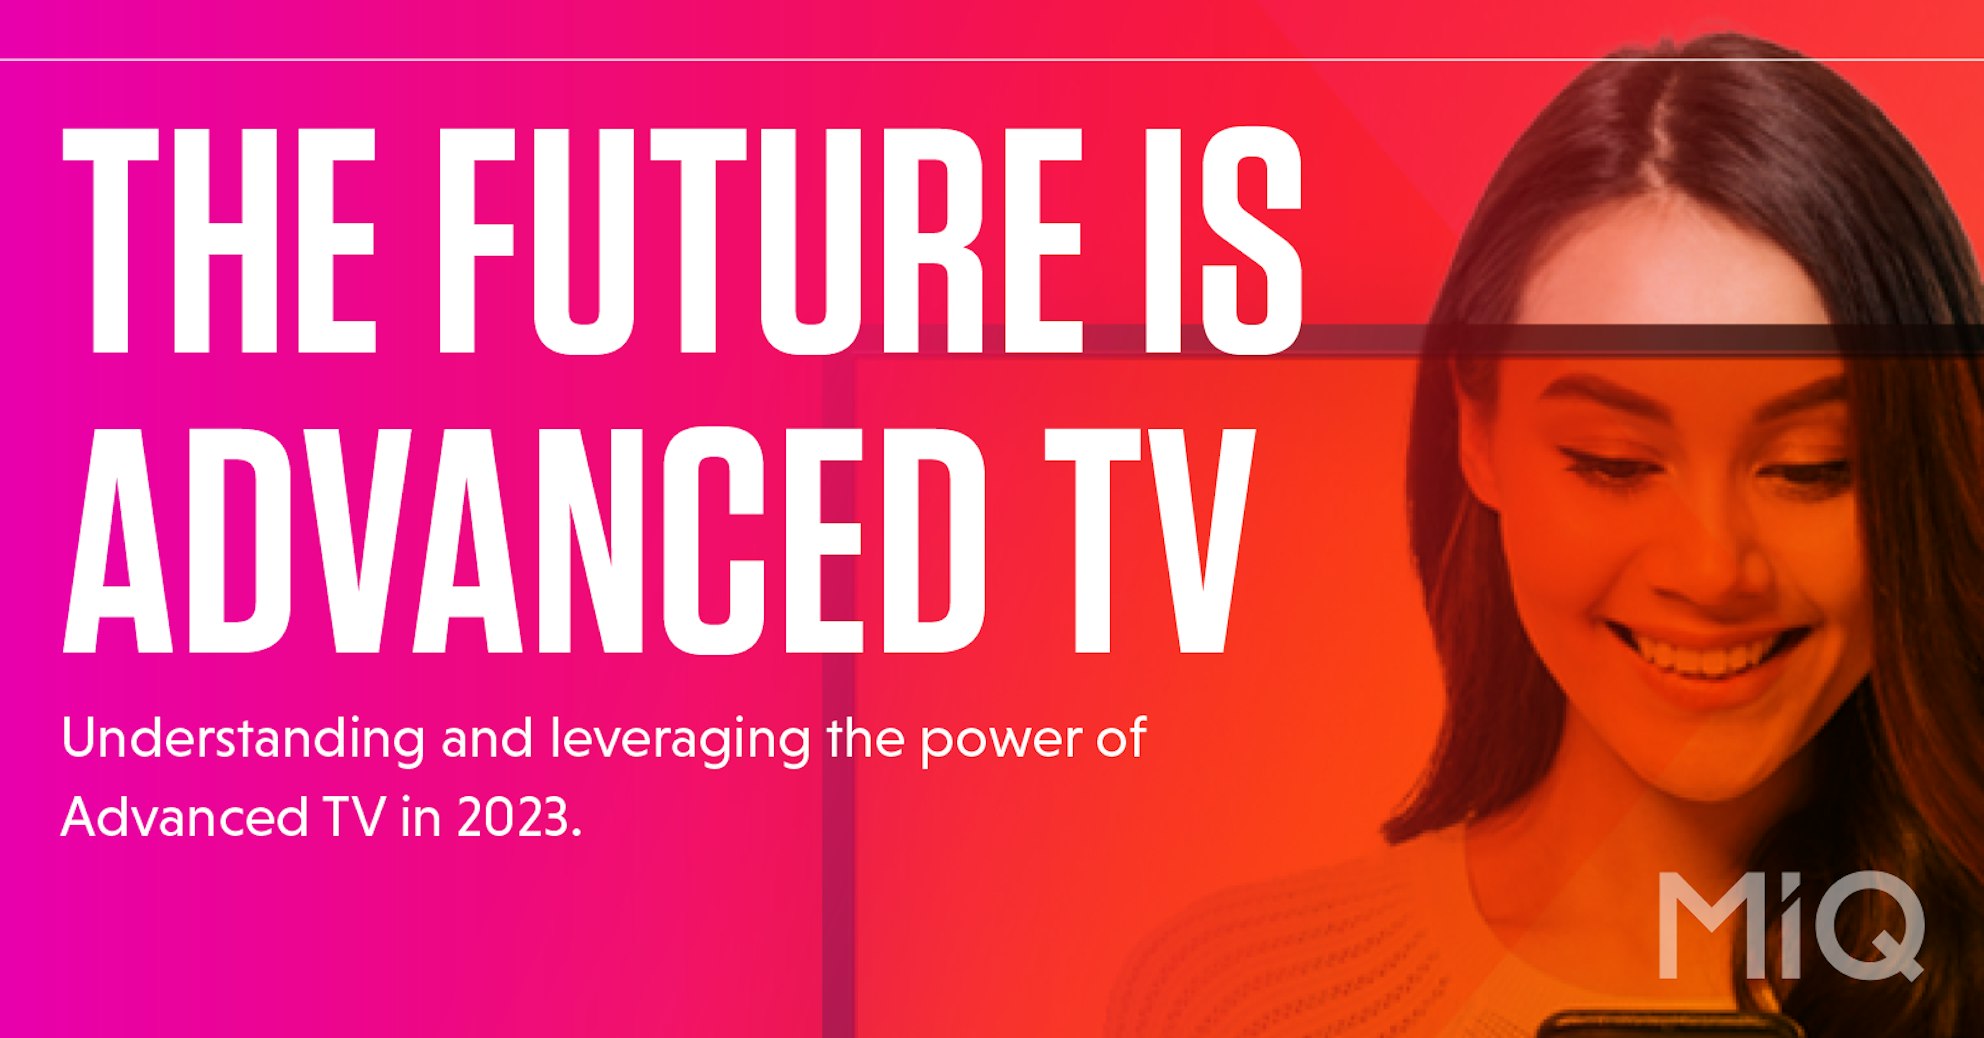 The future is Advanced TV